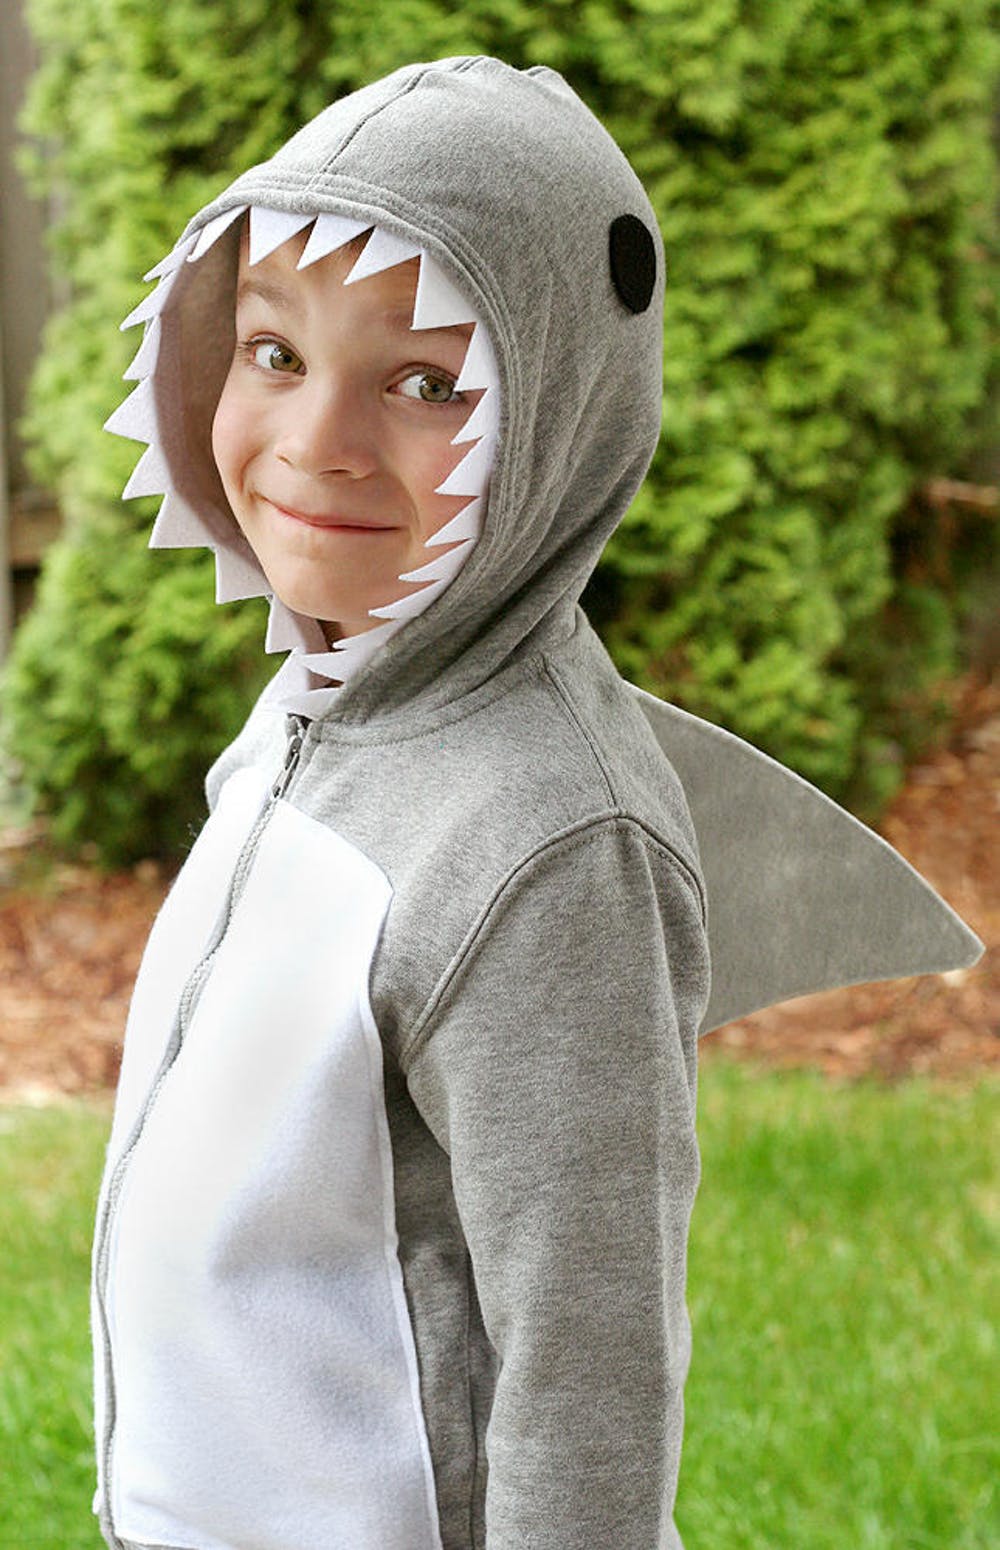 Shark Costume | Animal Halloween Costumes for Kids, Adults - FarmFoodFamily.com